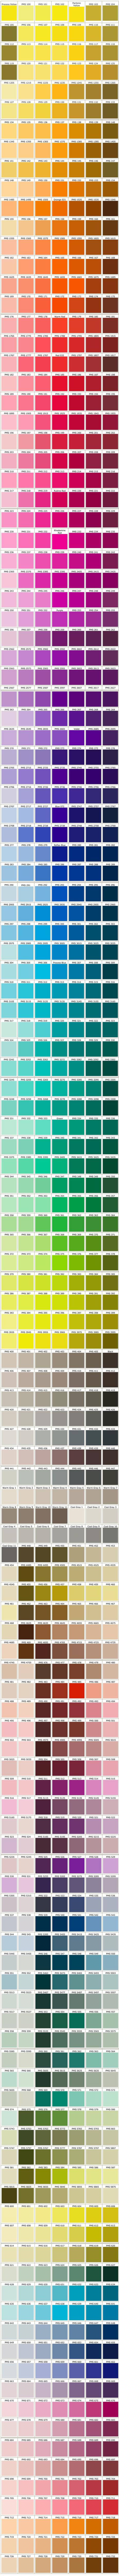 Chart pms matching Pantone Color